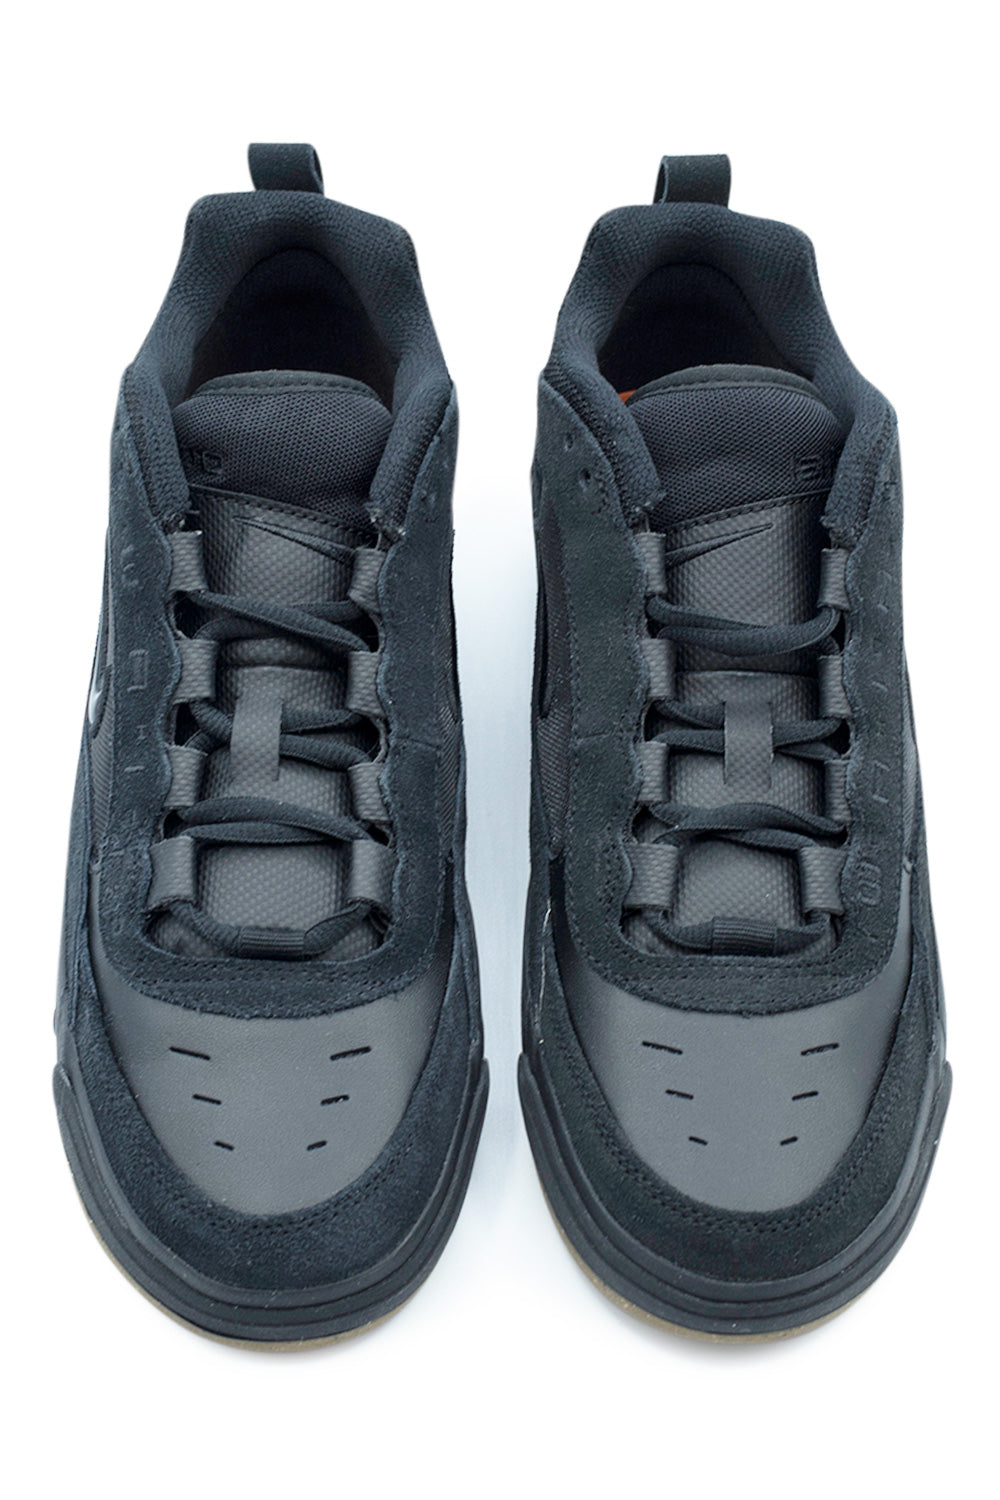 Nike SB Air Max Ishod Shoe Black / Black / Anthracite / Black - BONKERS